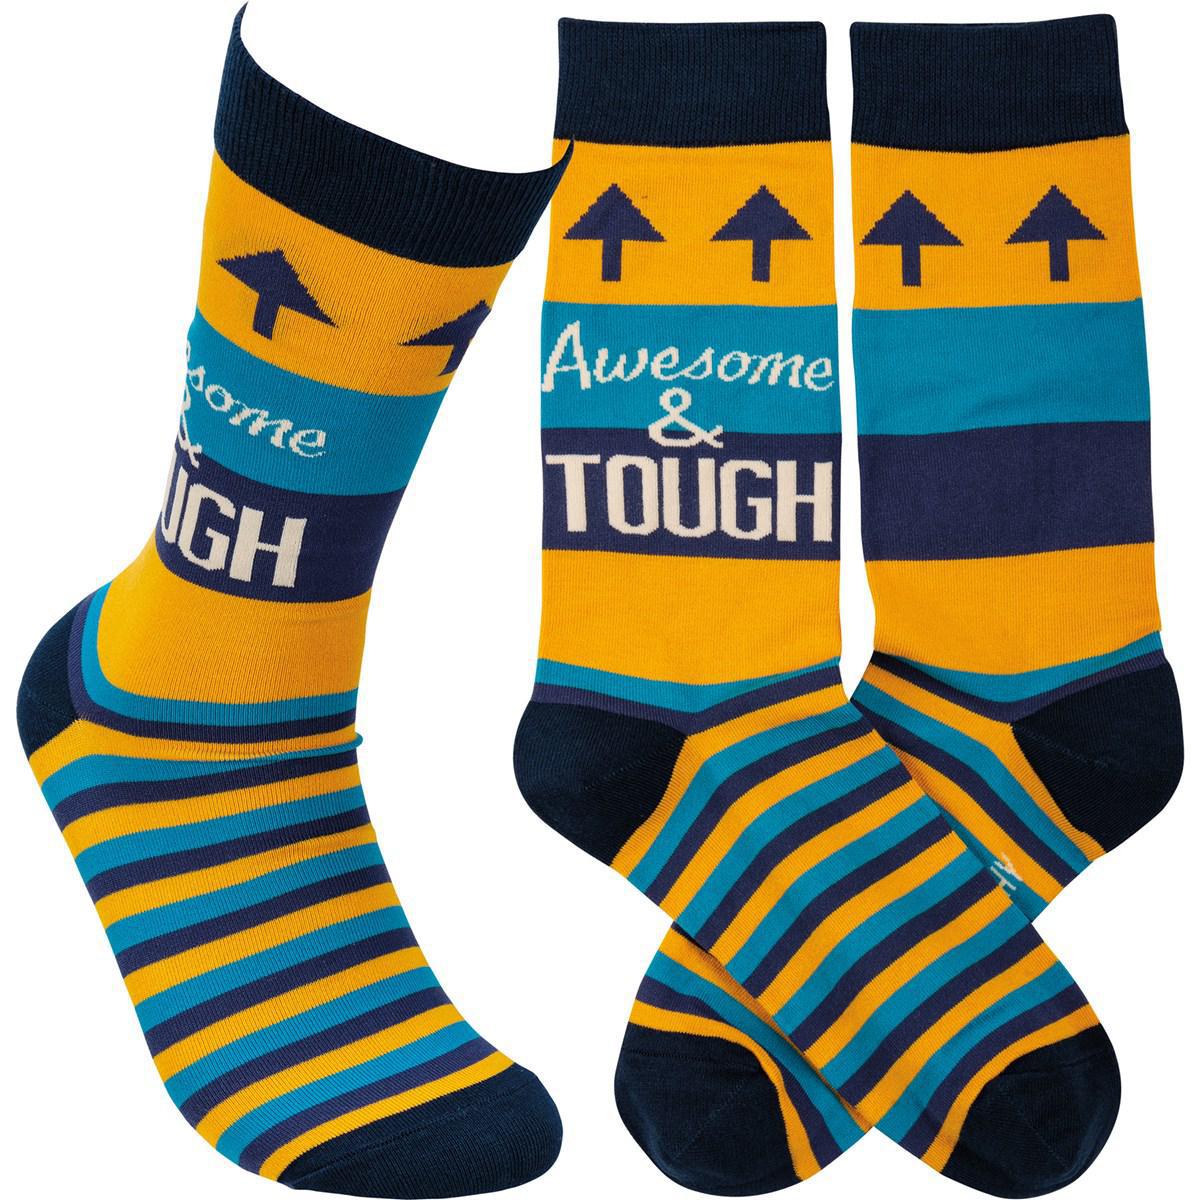 Awesome & Tough Socks